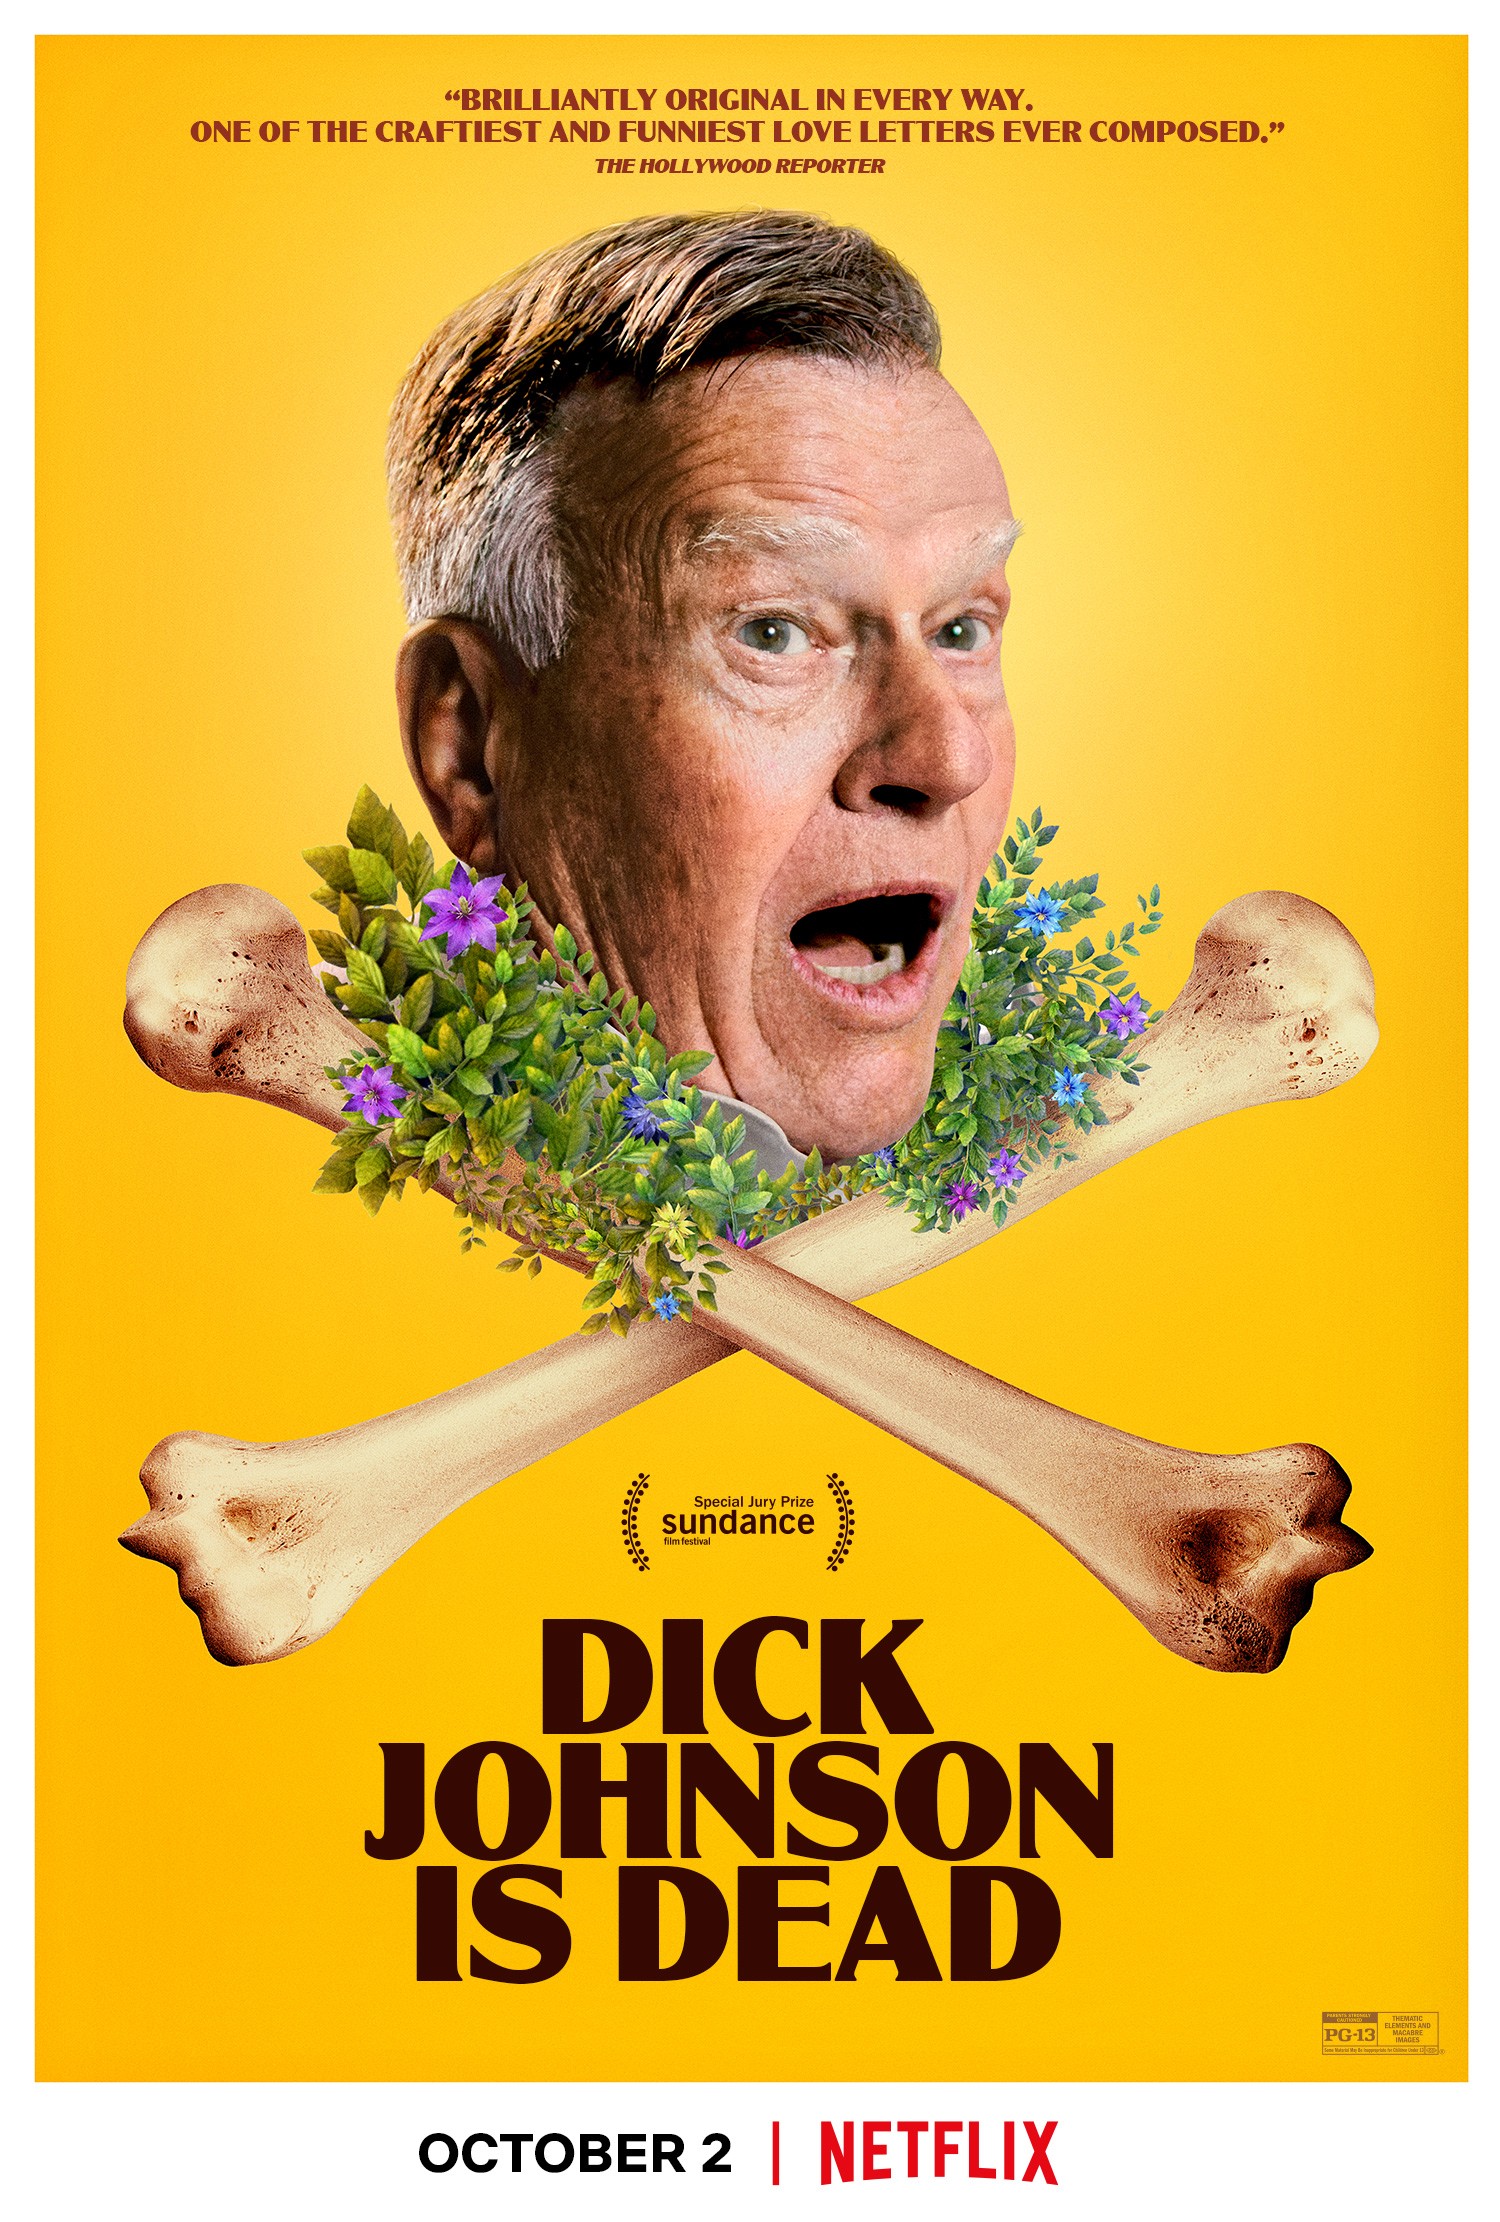 Bad Johnson  Rotten Tomatoes